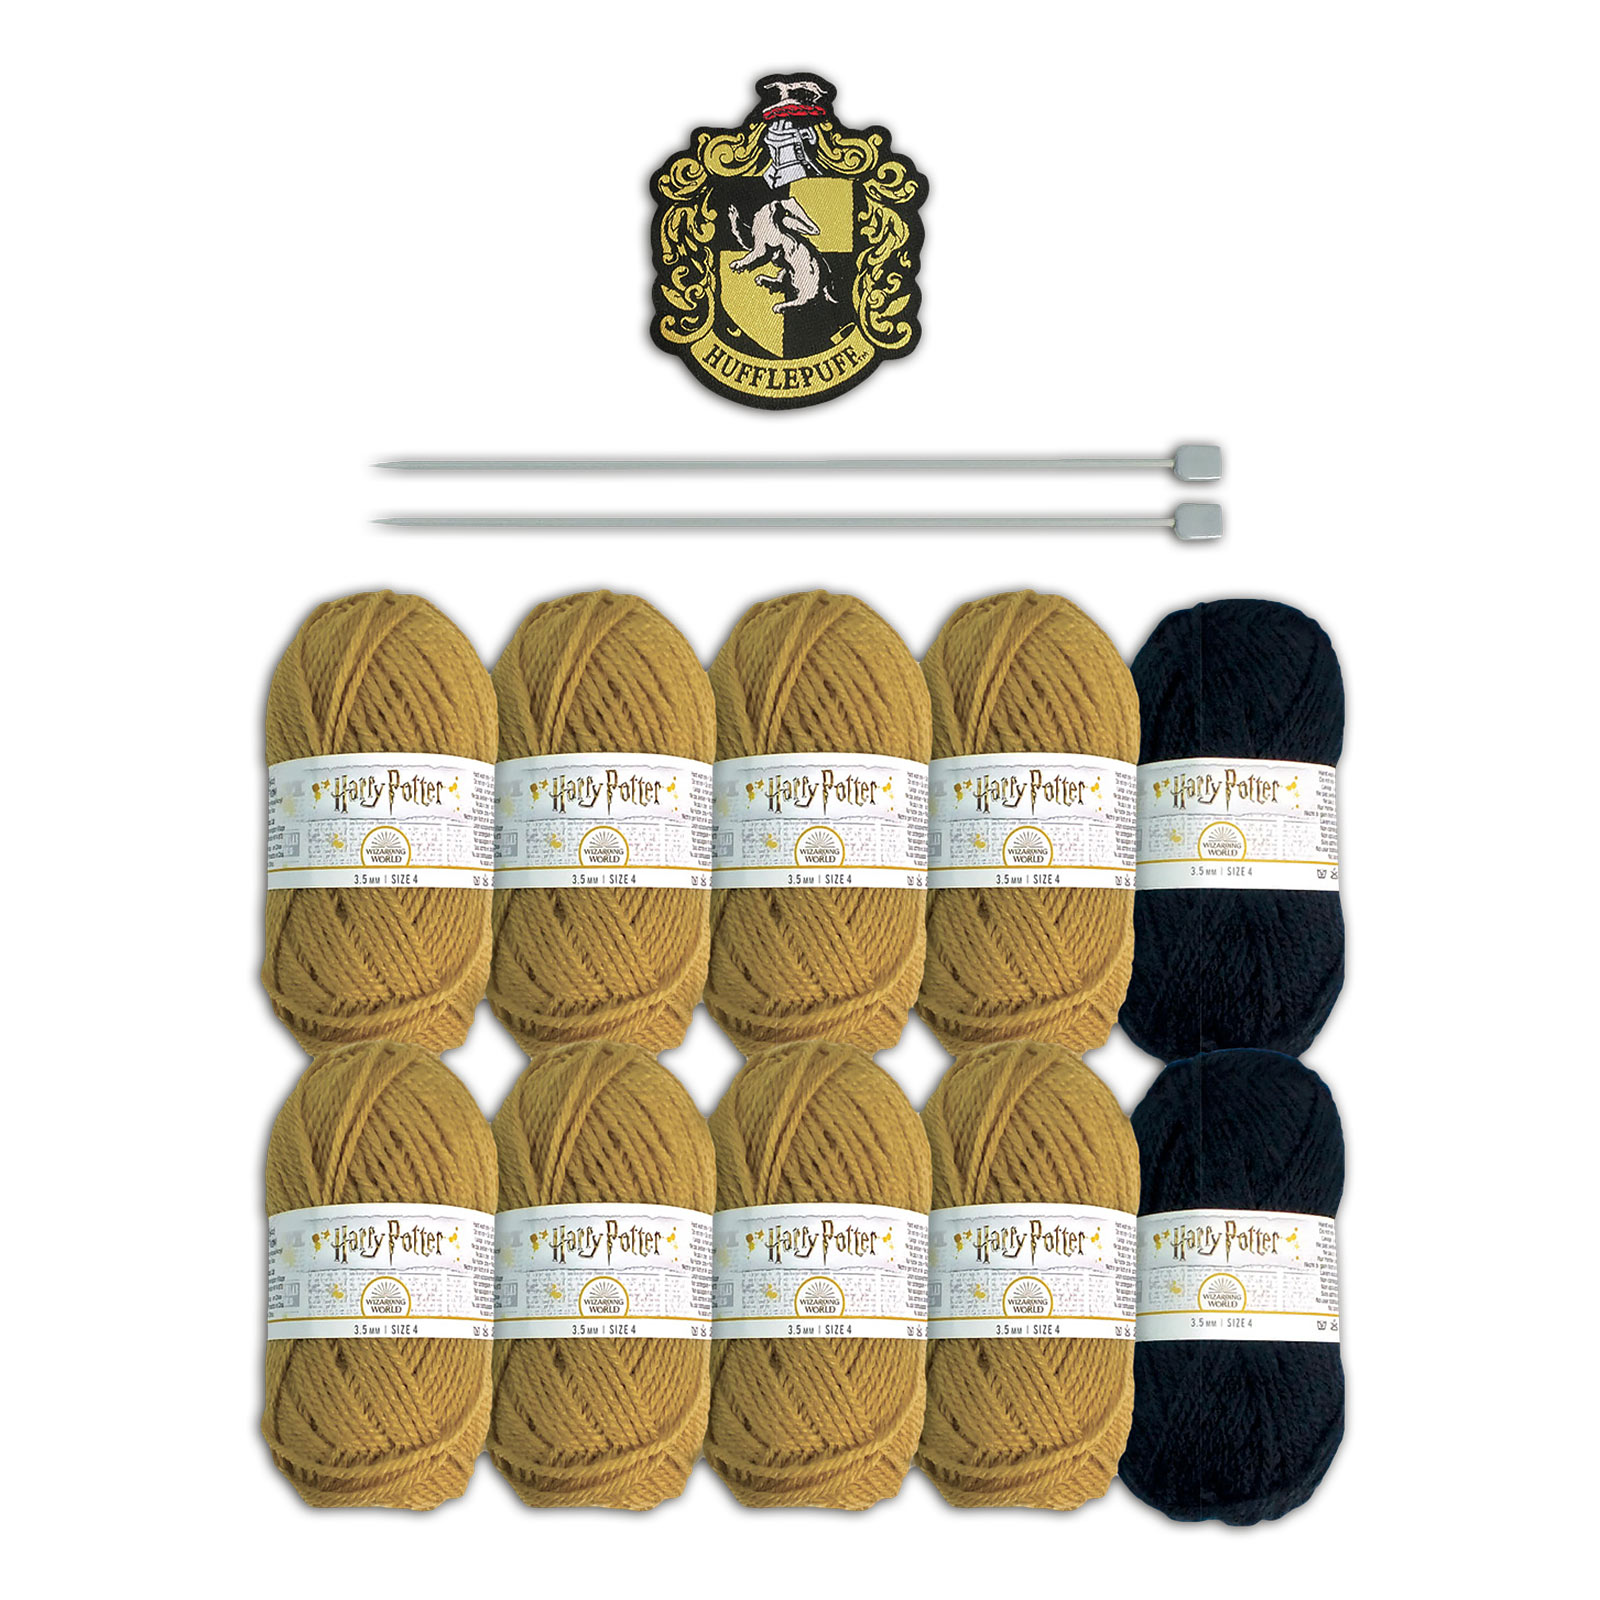 Harry Potter - Hufflepuff Scarf Knitting Set